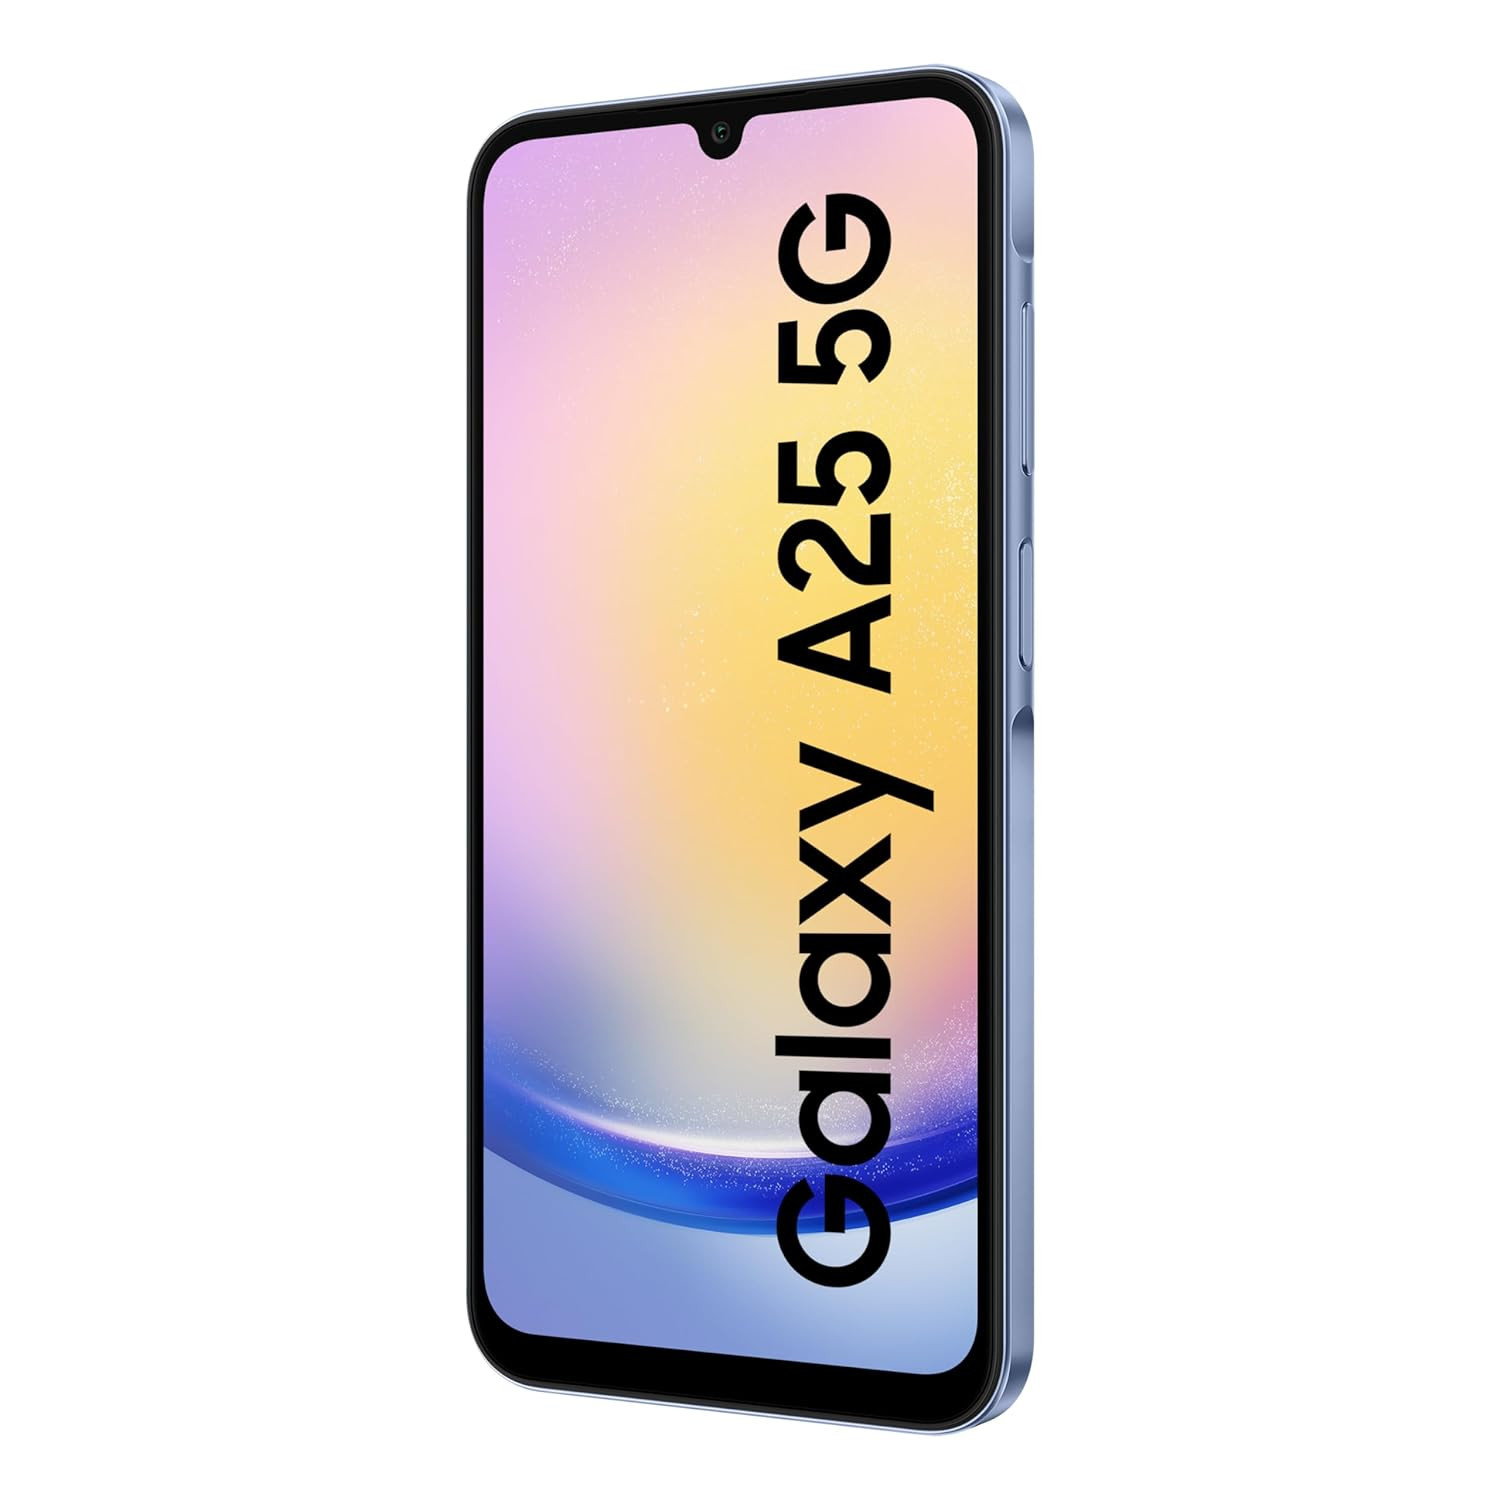 Samsung Galaxy A25 5G Smartphone